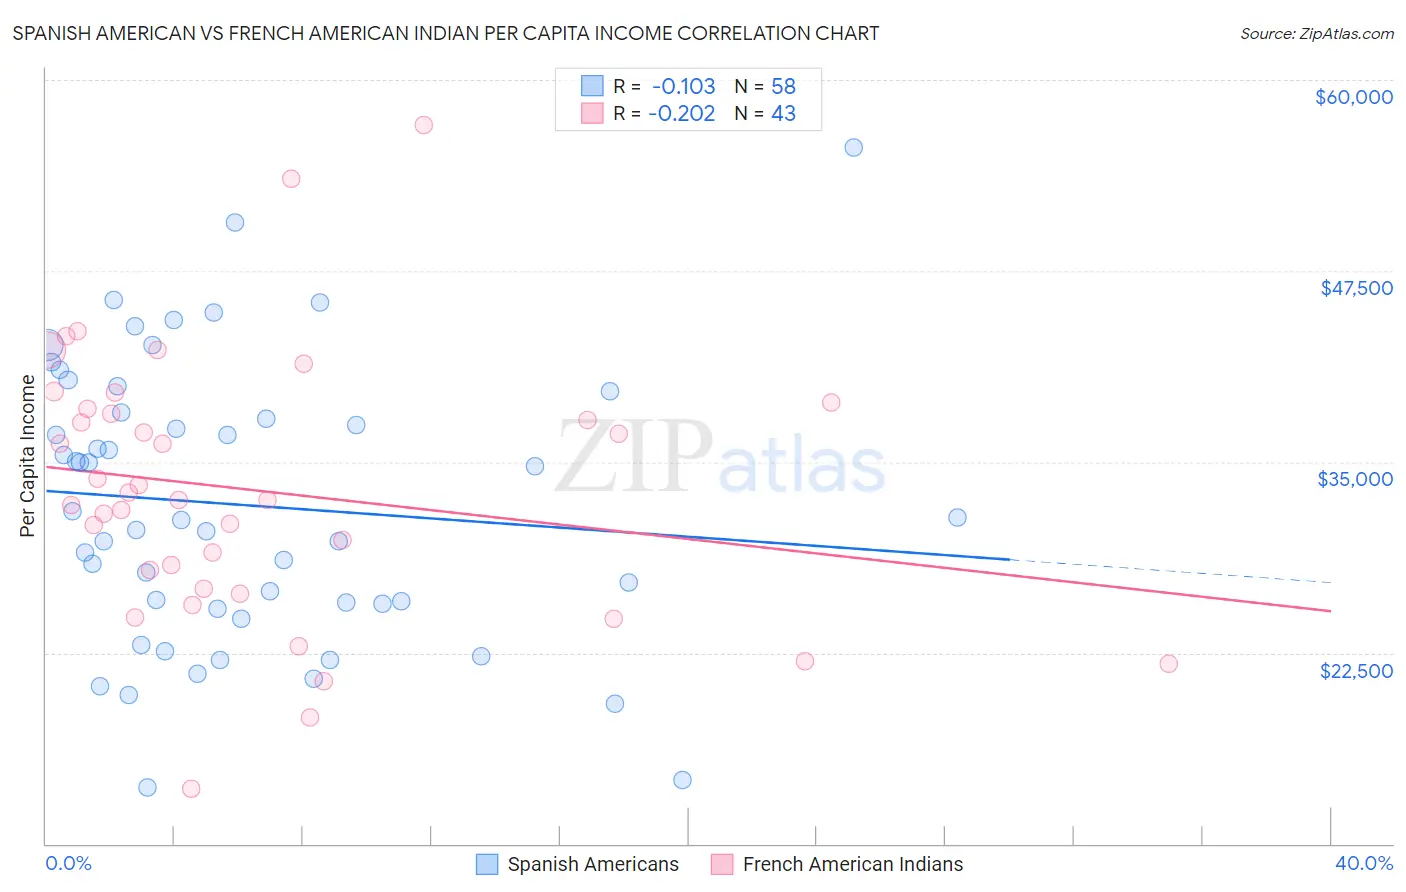 Spanish American vs French American Indian Per Capita Income